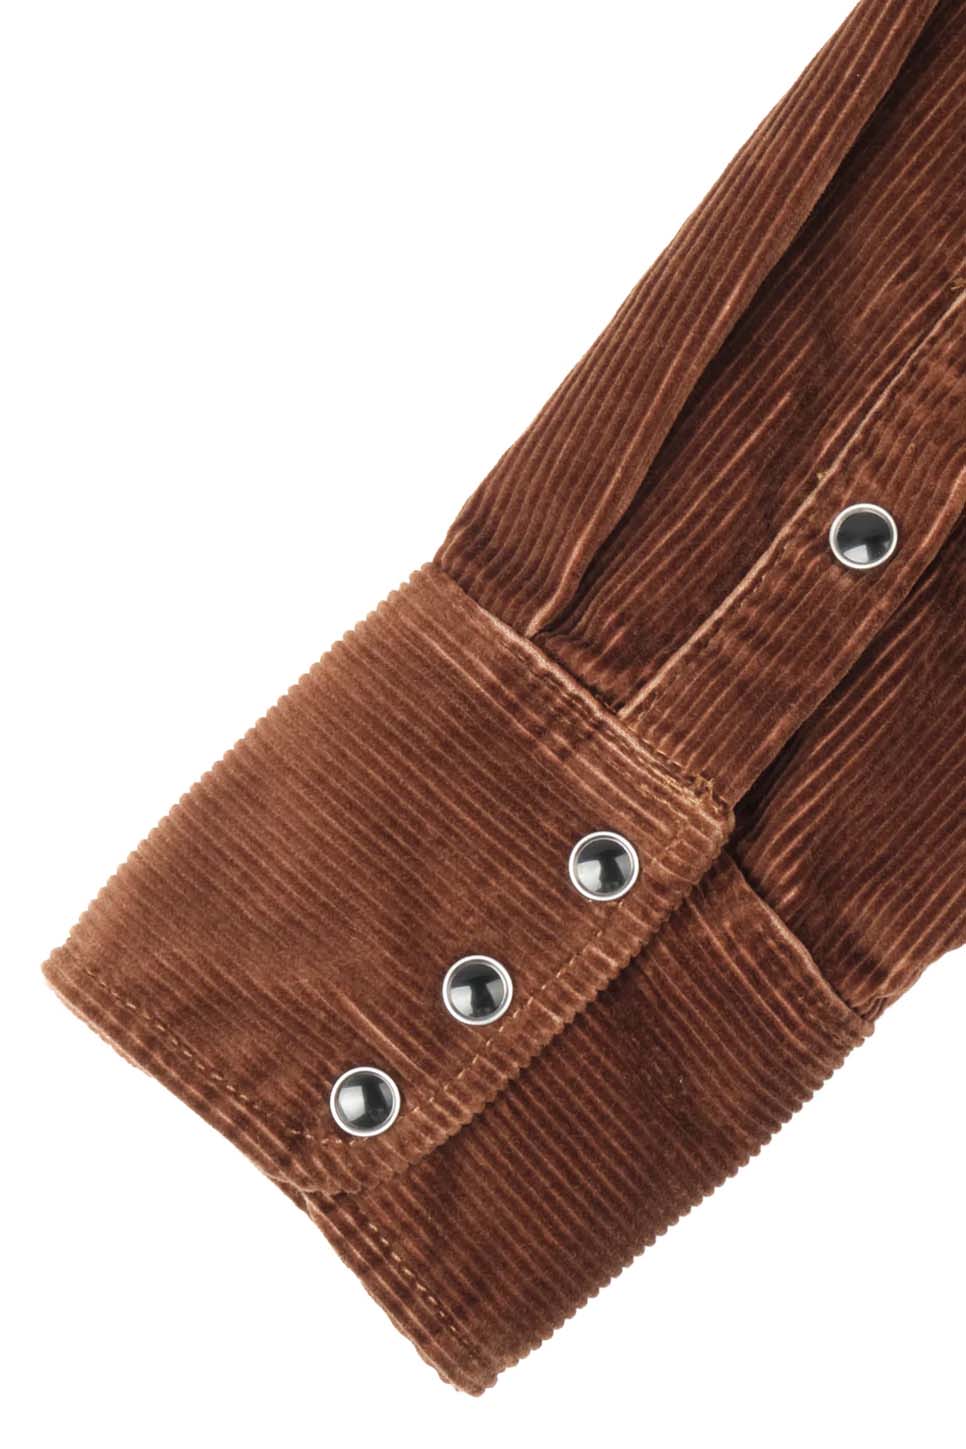 Freenote Cloth - Calico LS - Brown Cord - Sleeve